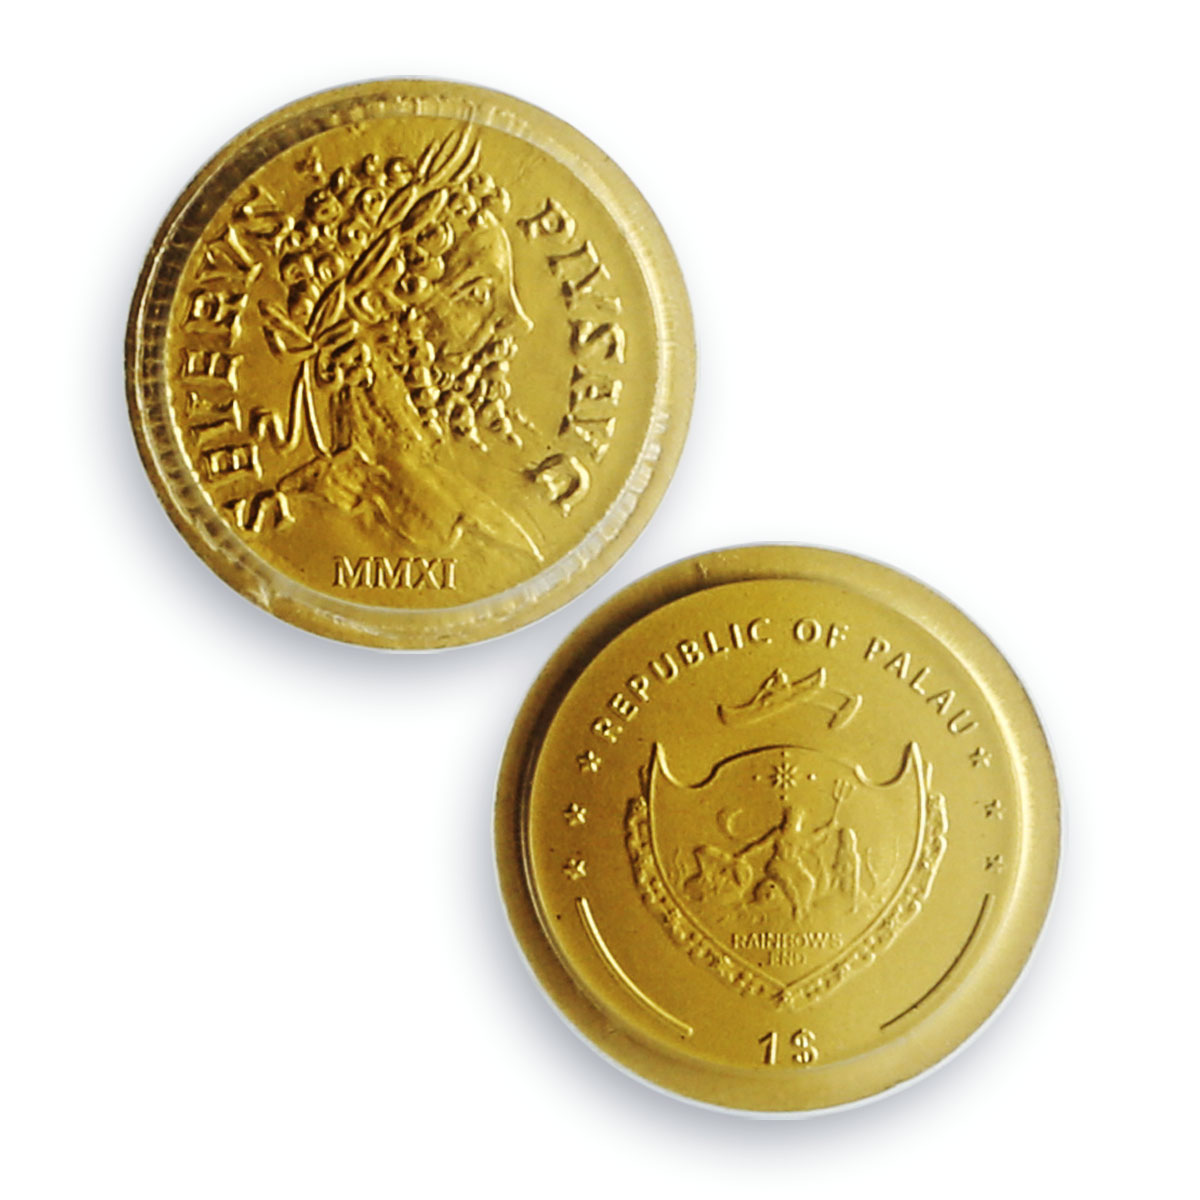 Palau 1 dollar Rome Empire Emperor Severus Politics MS70 PCGS gold coin 2011